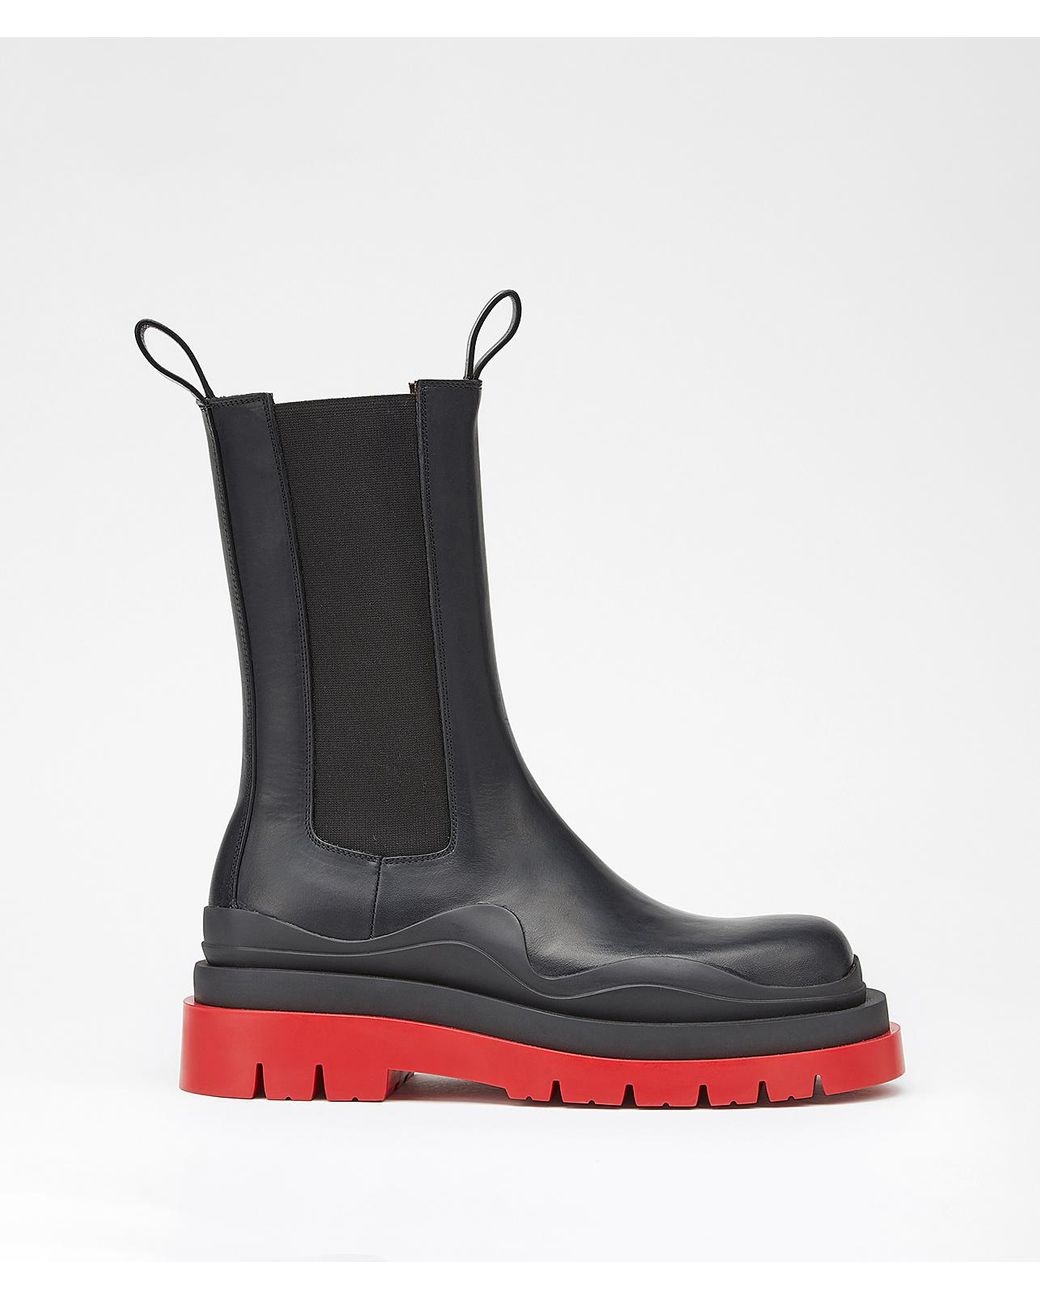 Bottega Veneta The Tire Boots in Black Bright Red (Black) - Save 2% - Lyst